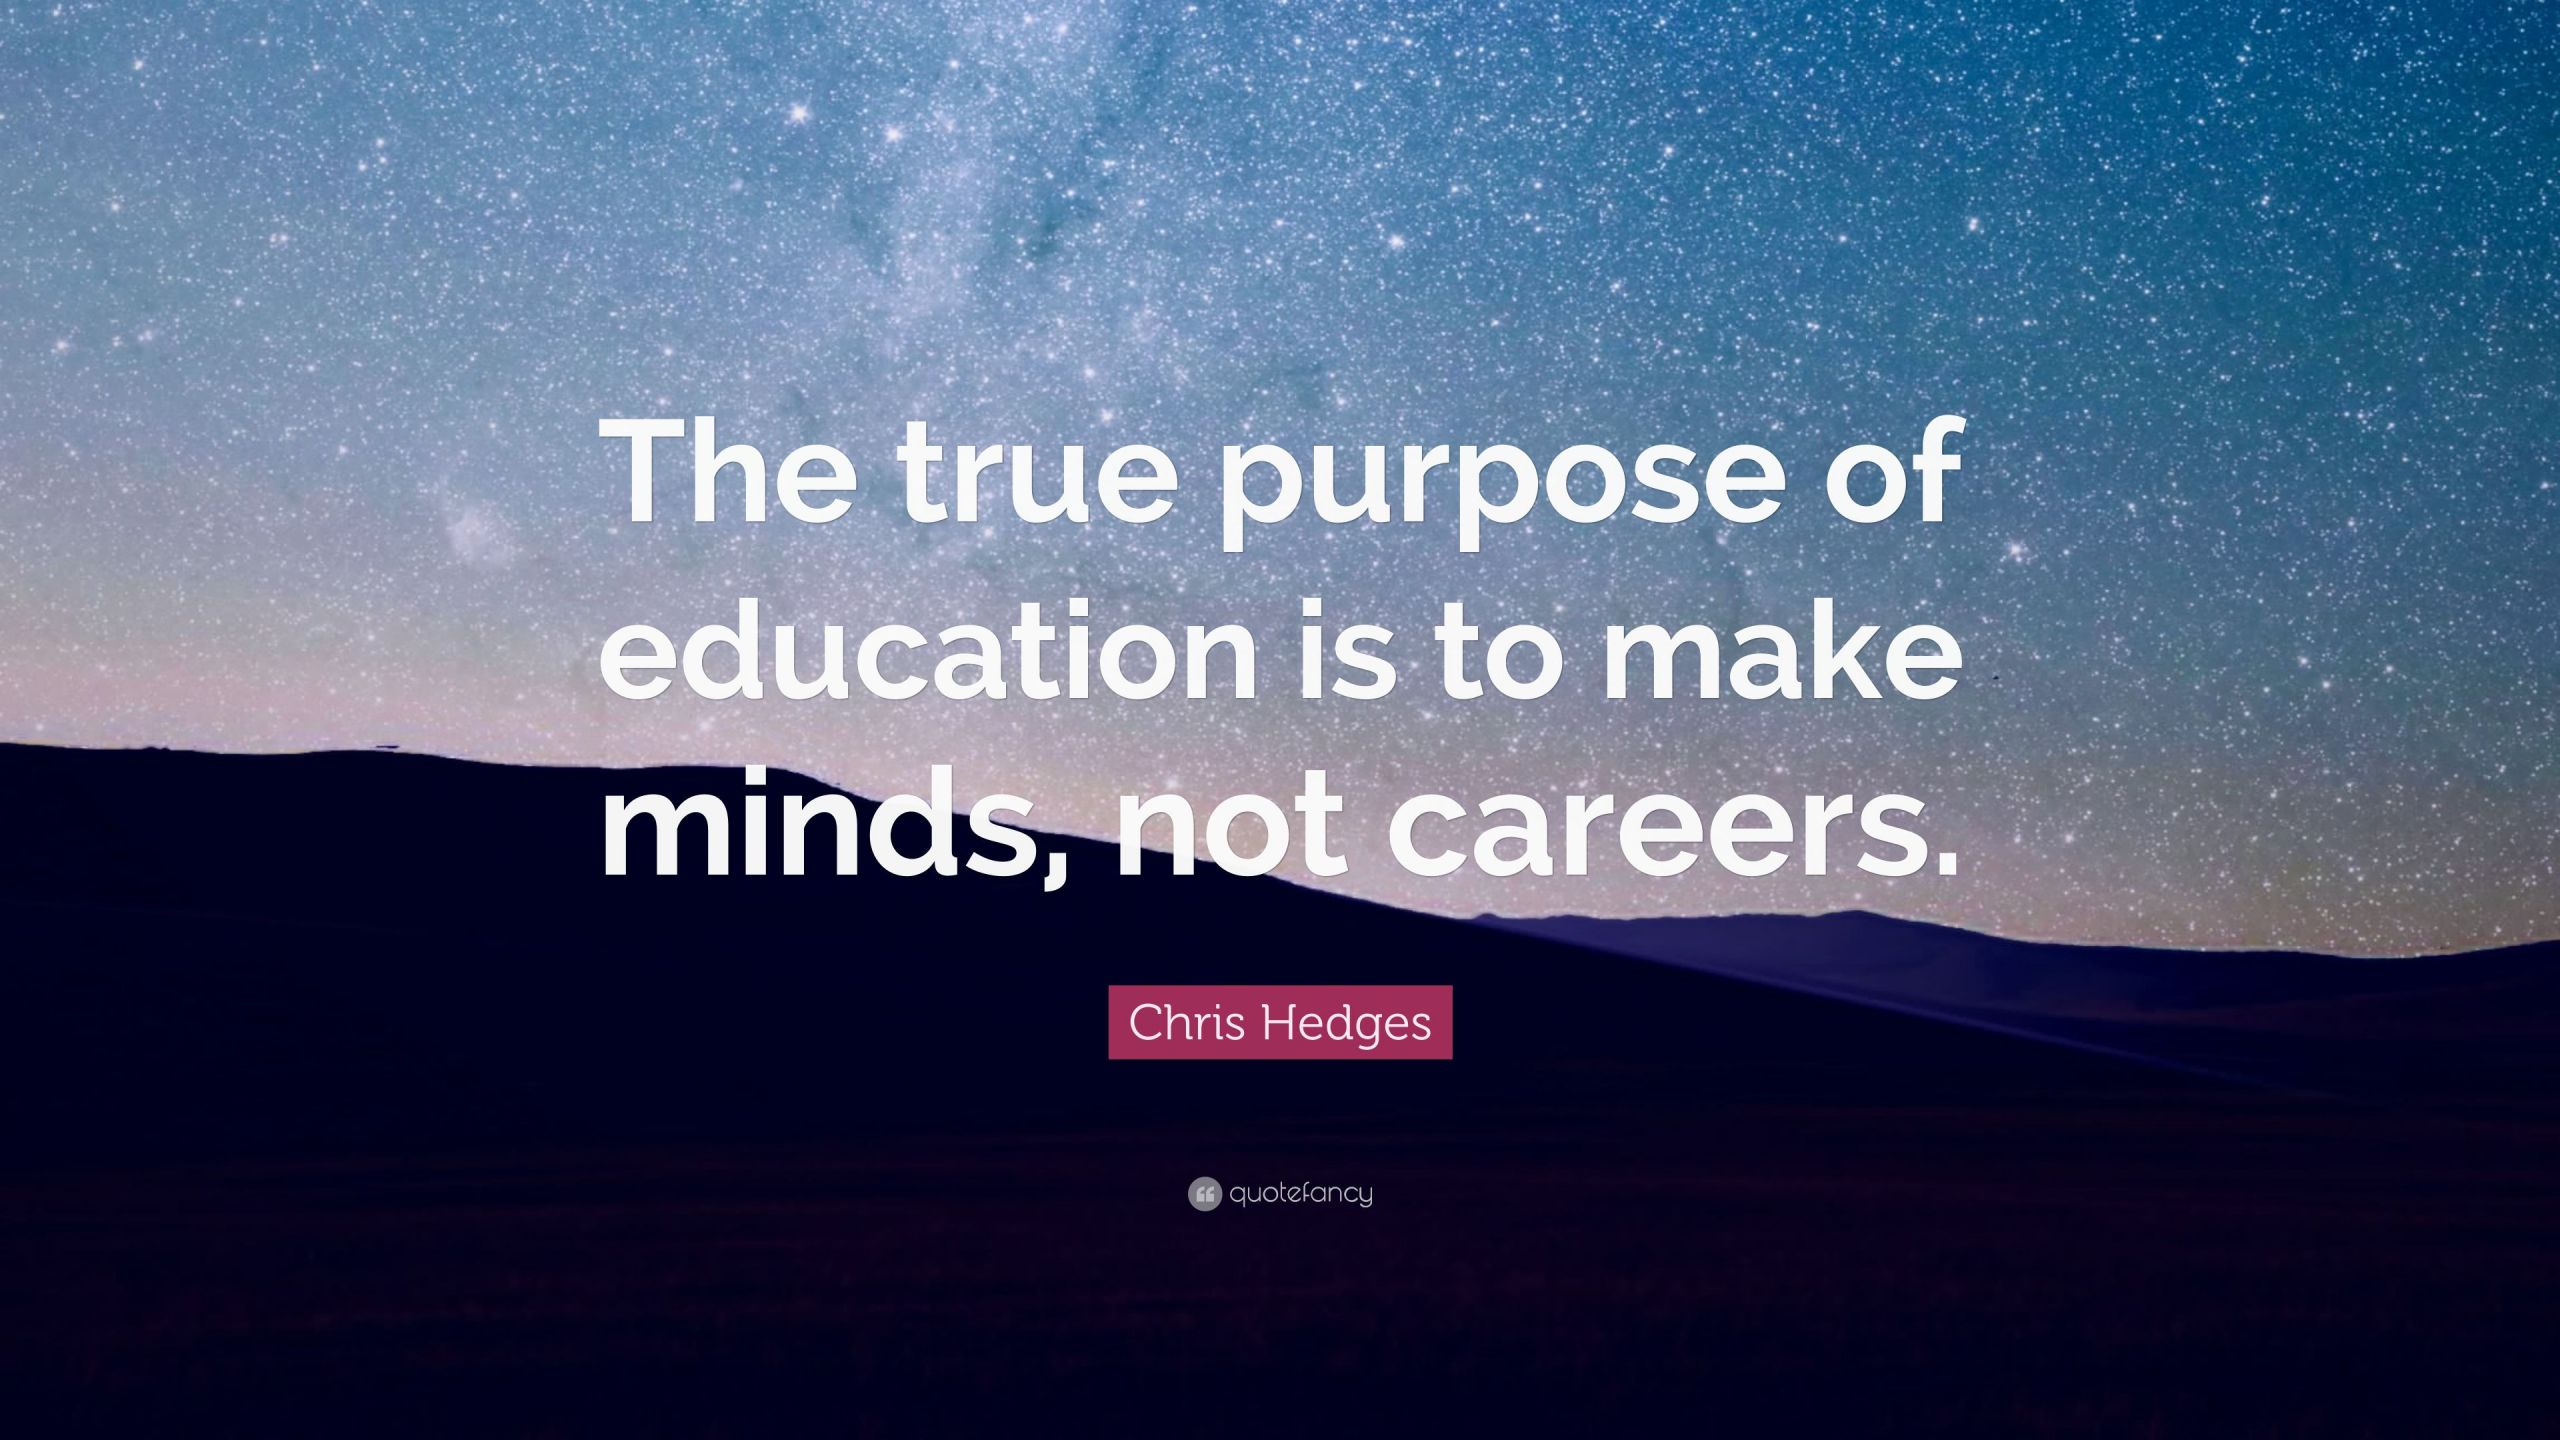 Purpose Of Education Quote
 Chris Hedges Quote “The true purpose of education is to